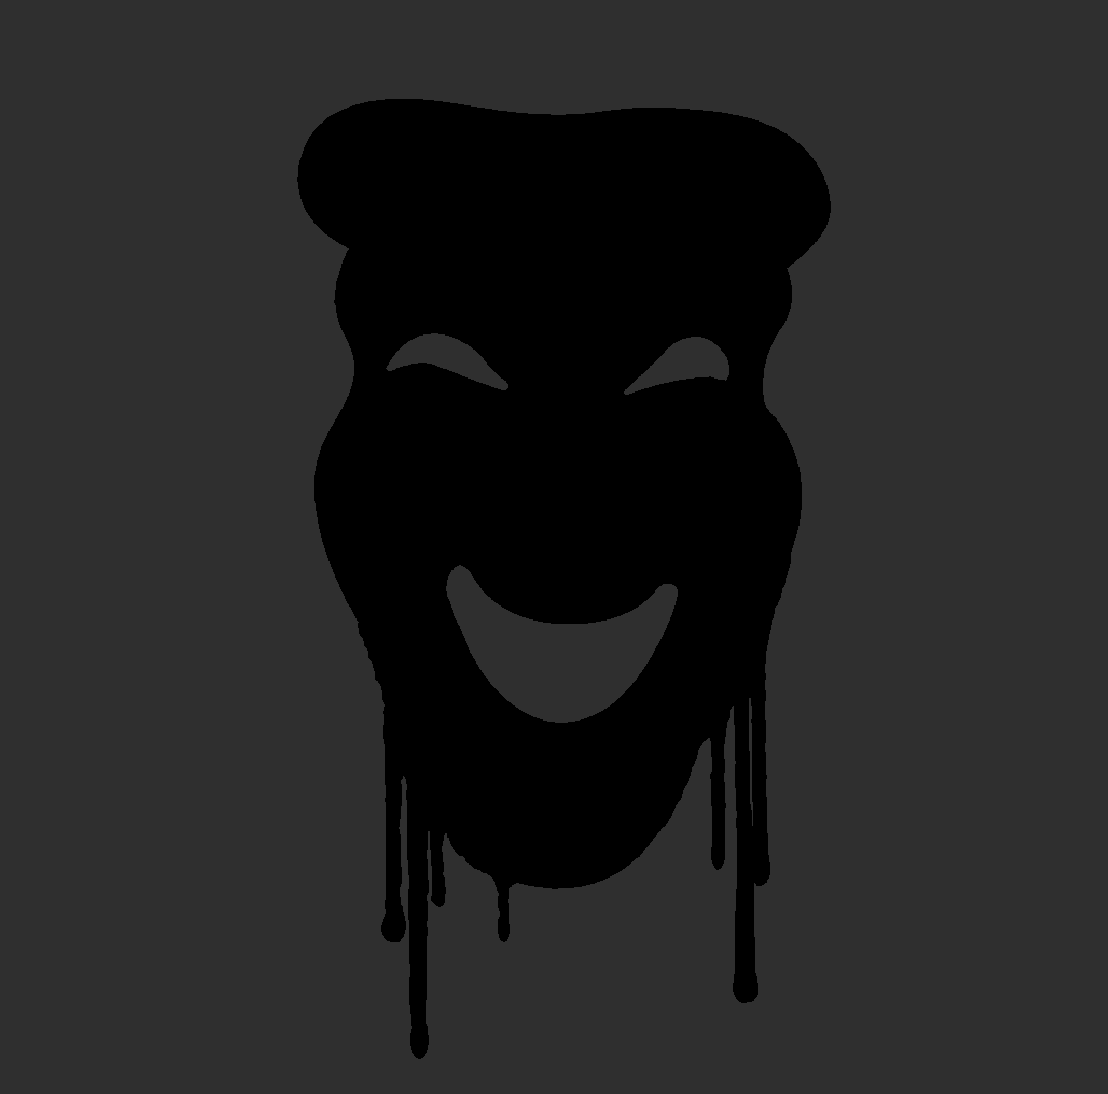 SCP Art: SCP-035 - possessive mask by GamingHedgehog on DeviantArt